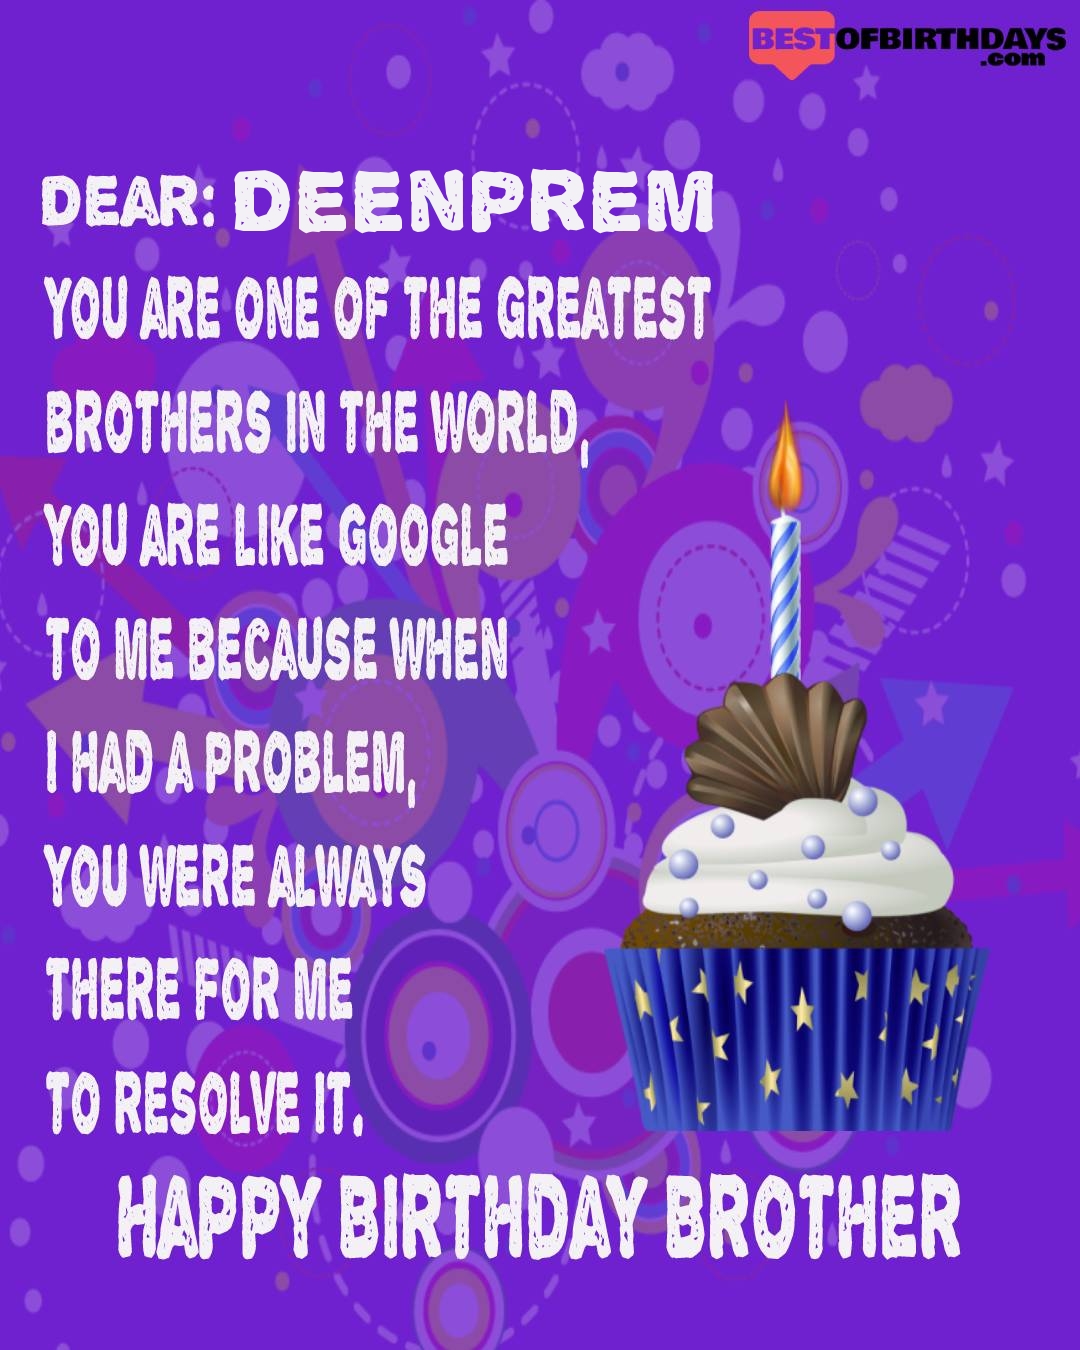 Happy birthday deenprem bhai brother bro